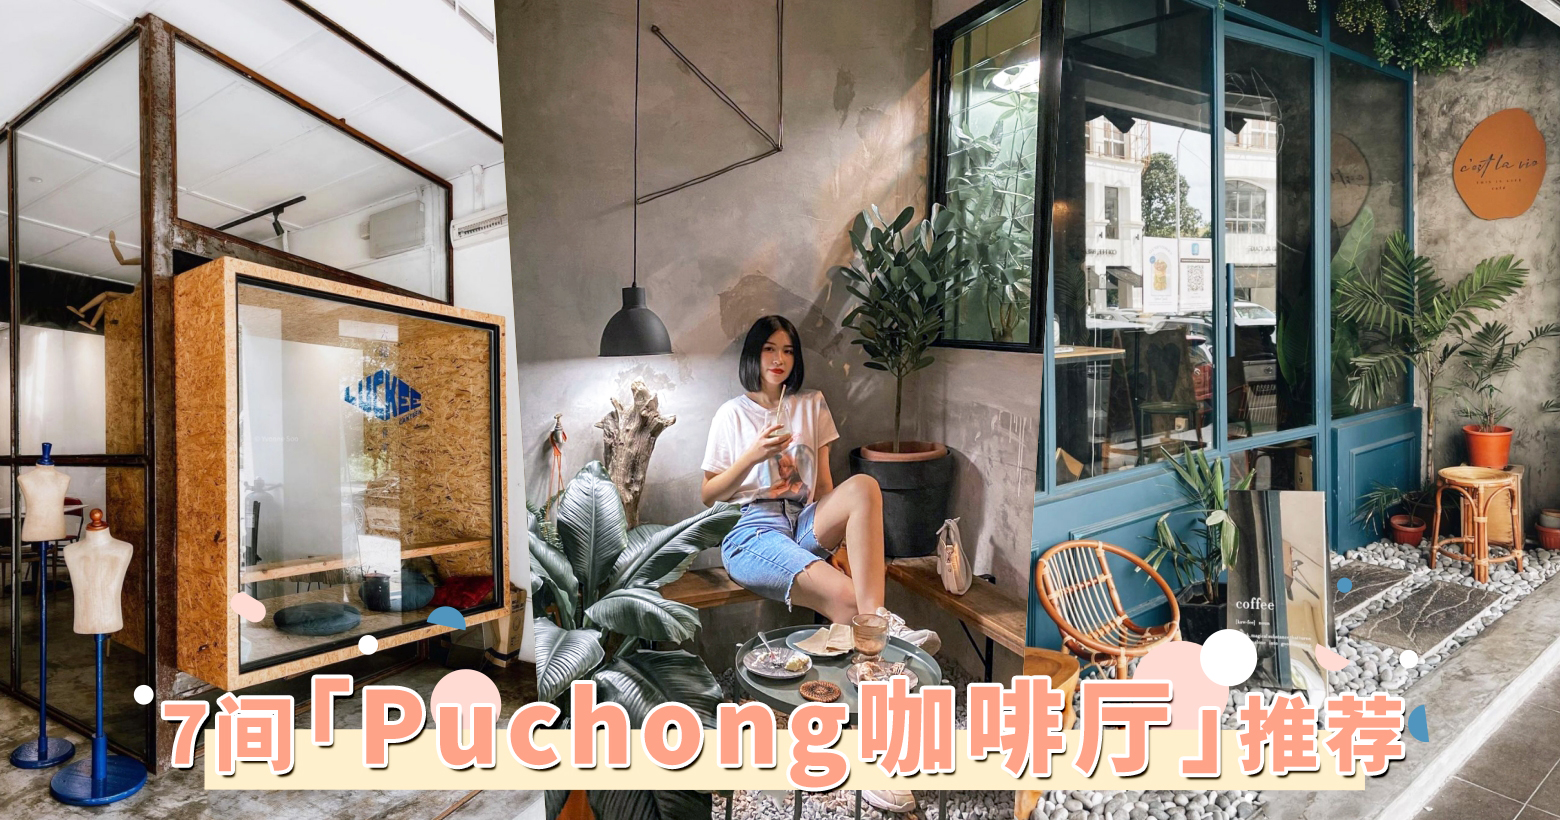 Cafe puchong Puchong MyKori